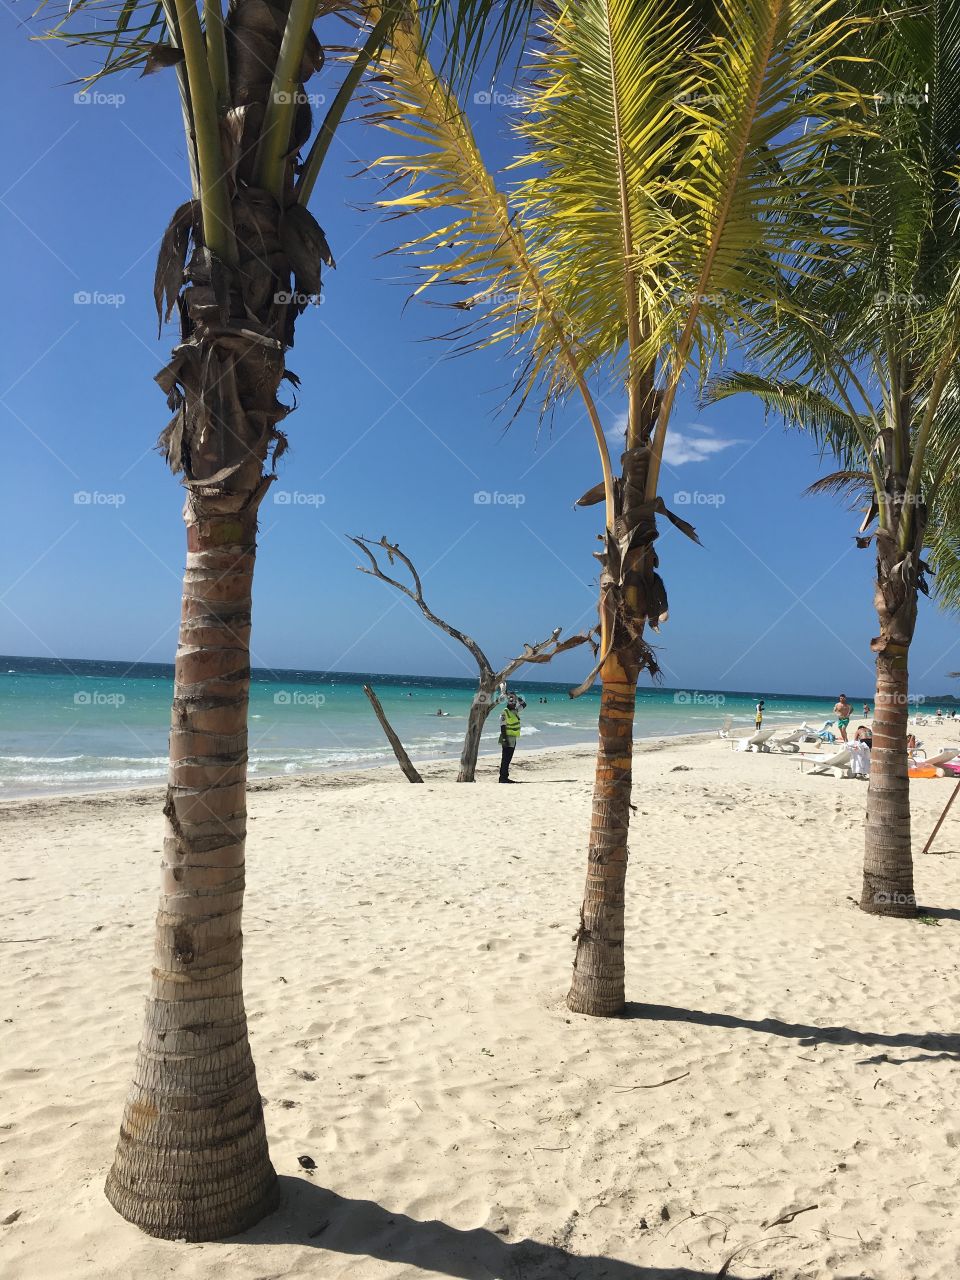 Is the Sea blue enough?👣😮 #view #michaltoloczkopodróżnik #photooftheday #photography #photo #photographer #photoshoot #travel #travelbug #leciodkryjswiat #travelblog #traveling #travelphotography #traveler #trip #jamaica #inspiration #discover #discoveryourworld #negril #life #carabbean #blogger #blog #world #foap #lifestyle #instagram #awesomeday #paradise @national.geographic @magazynpodroze @jamaica @pro_jamaica @viewjamaica @jamaica_west @jamaicaobserver